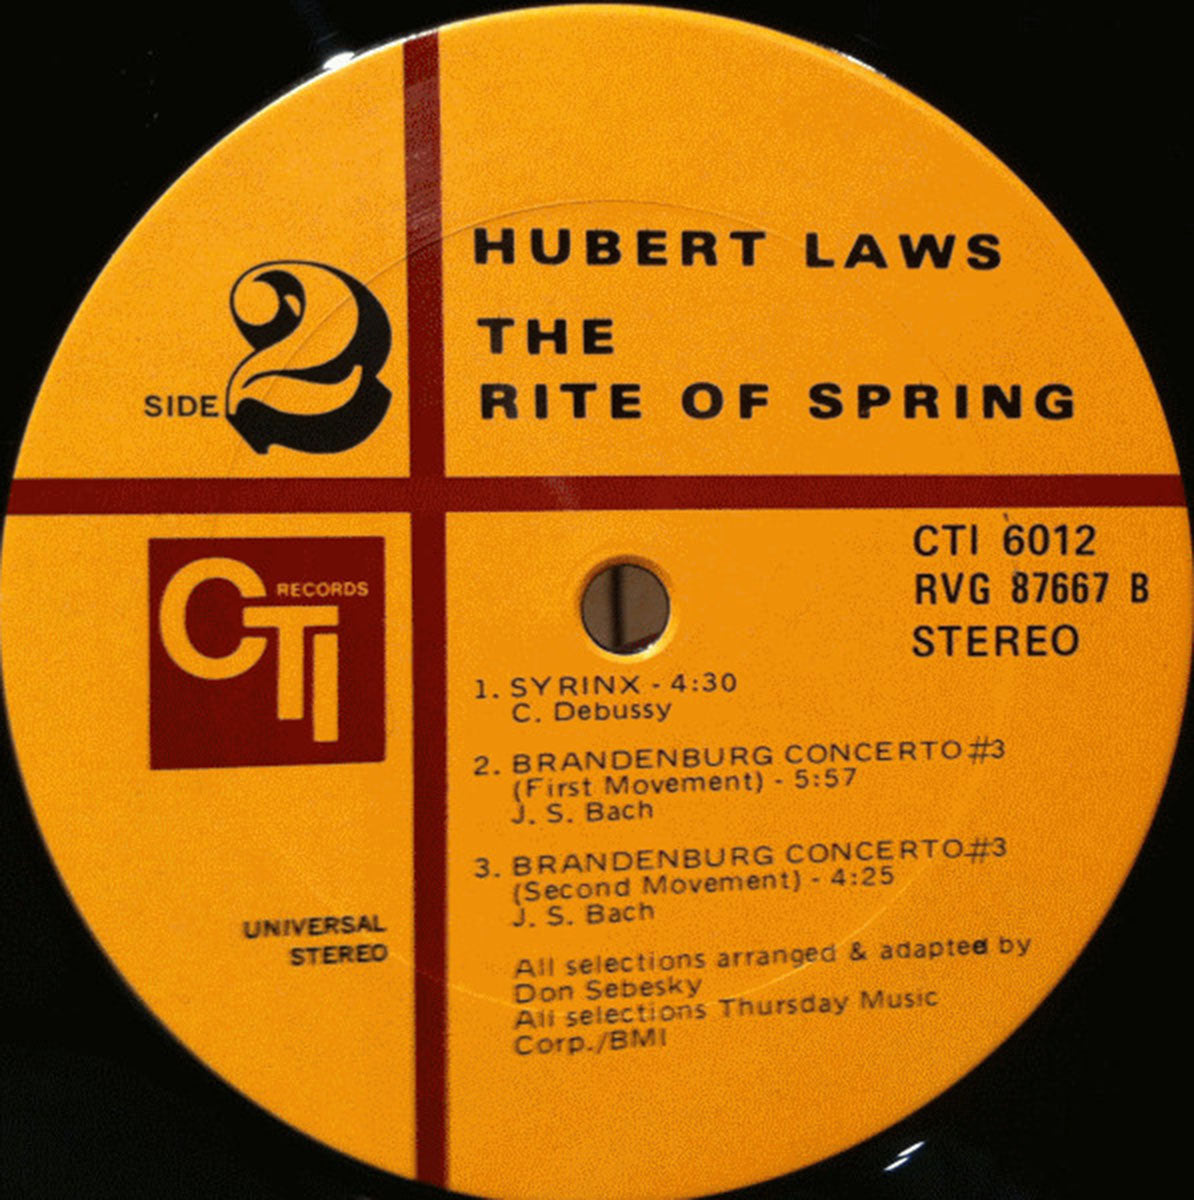 Hubert Laws – The Rite Of Spring